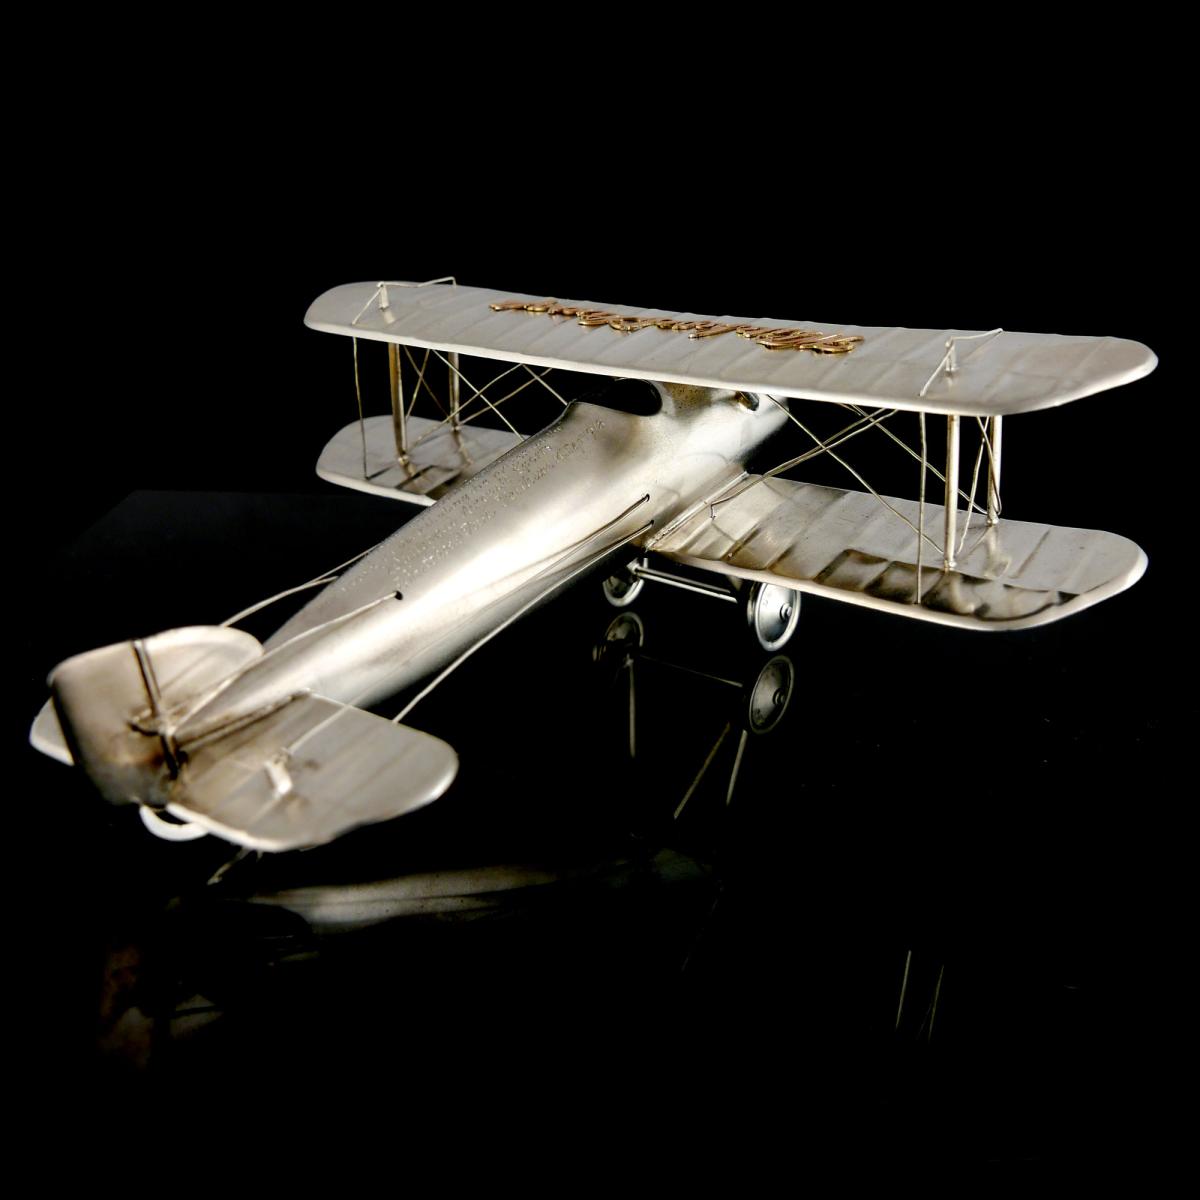 Whitehead Comet - A First World War Lady Haig Presentation Model Biplane, 1917